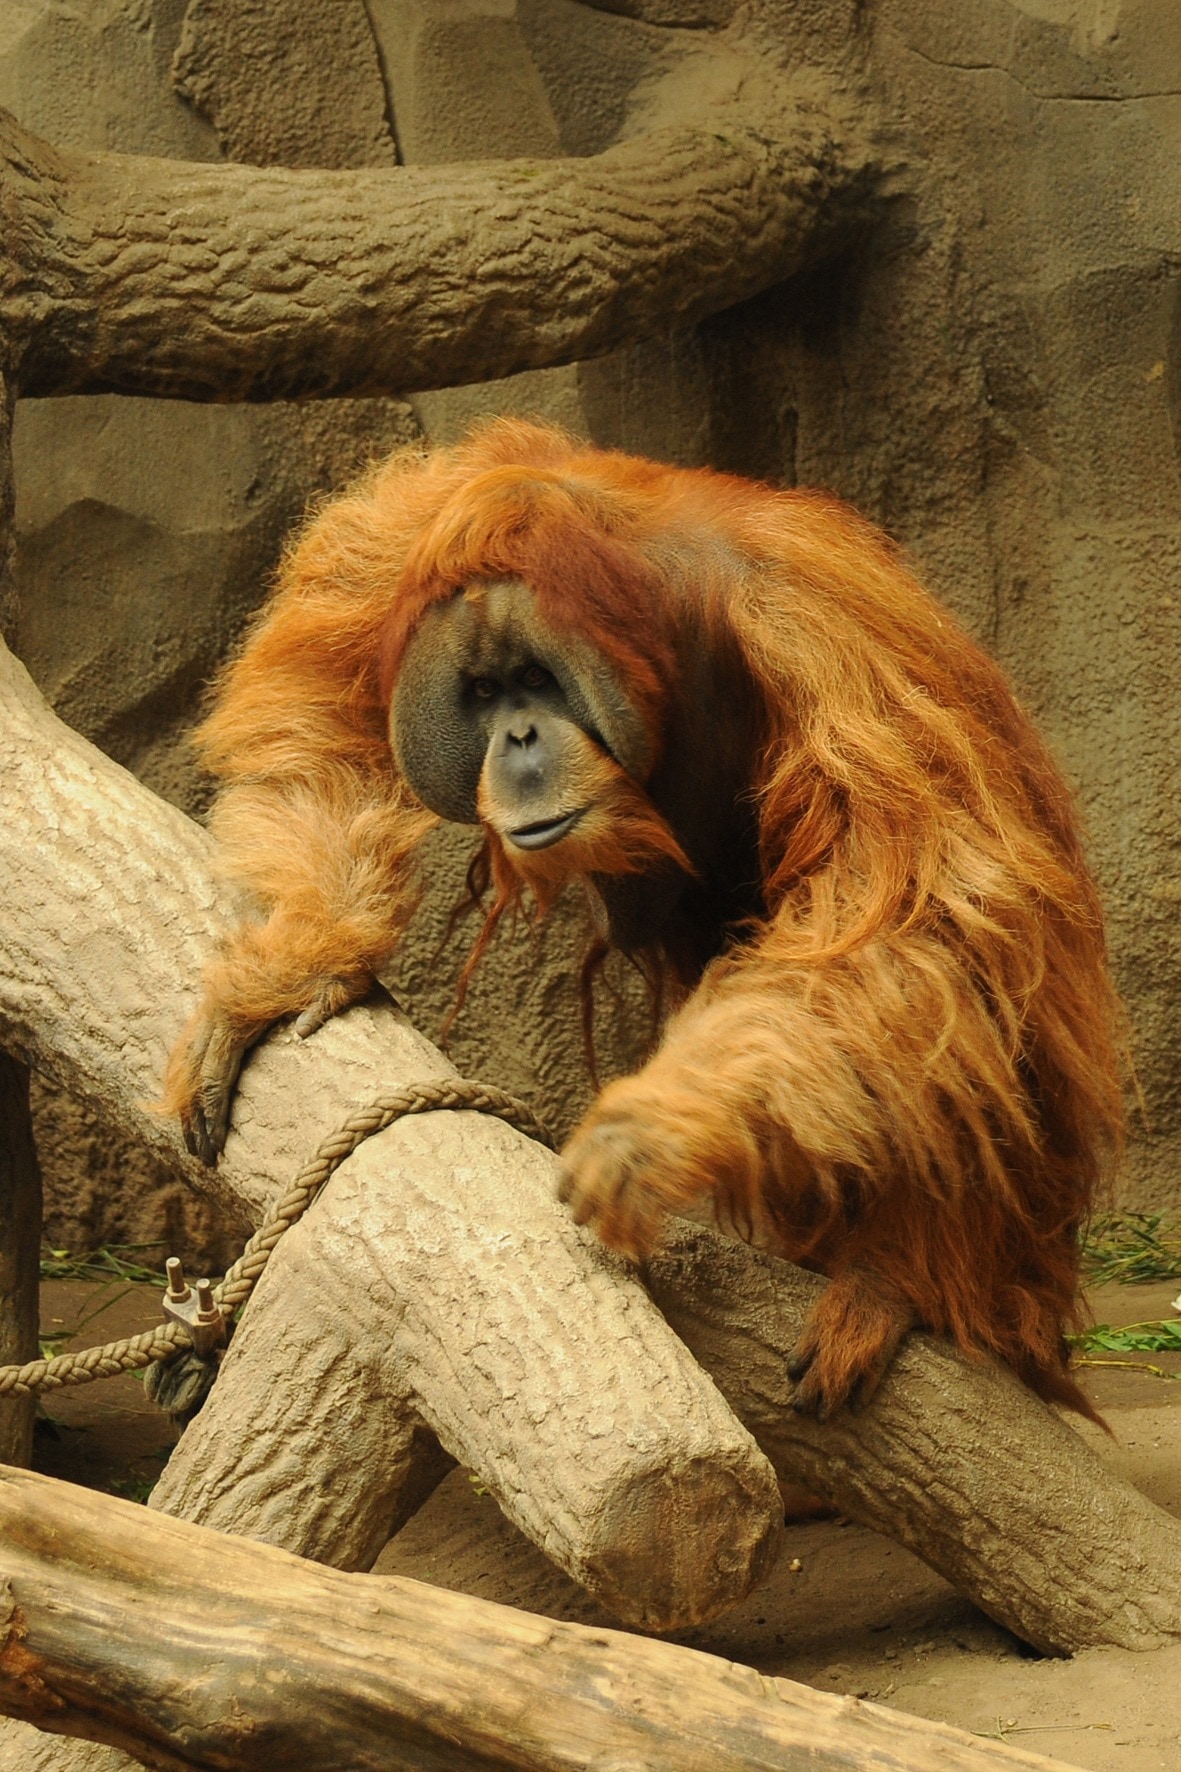 orangutan perching on grey concrete brunch inside the cage